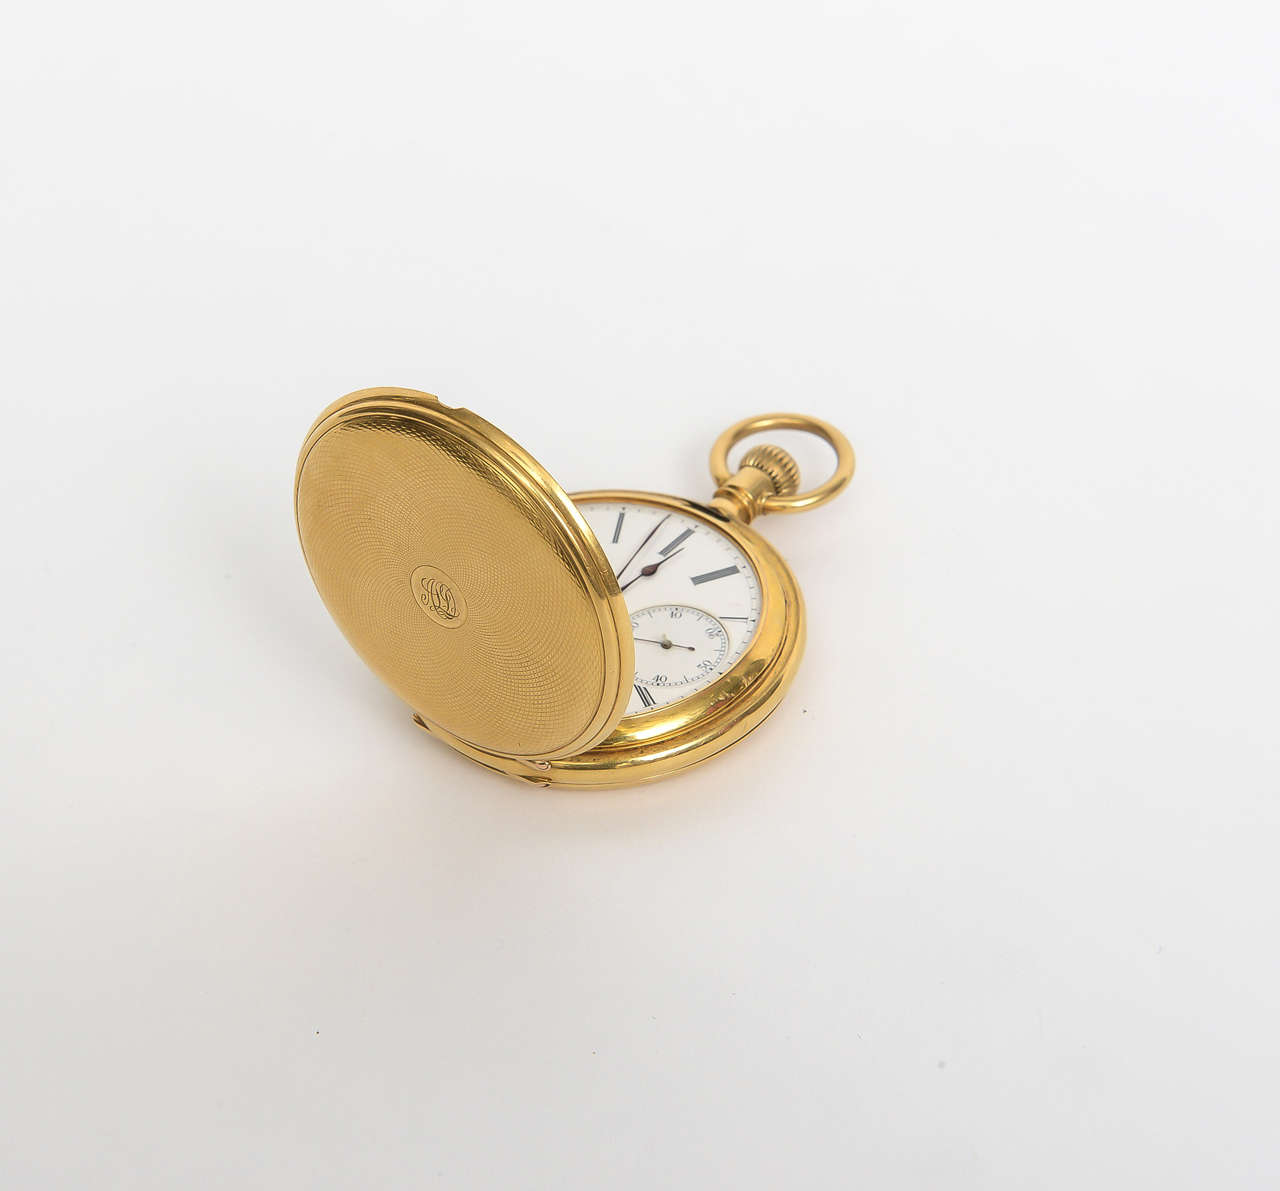 American Pocket Watch, Tiffany, Movement by Patek Philippe, 19th Century